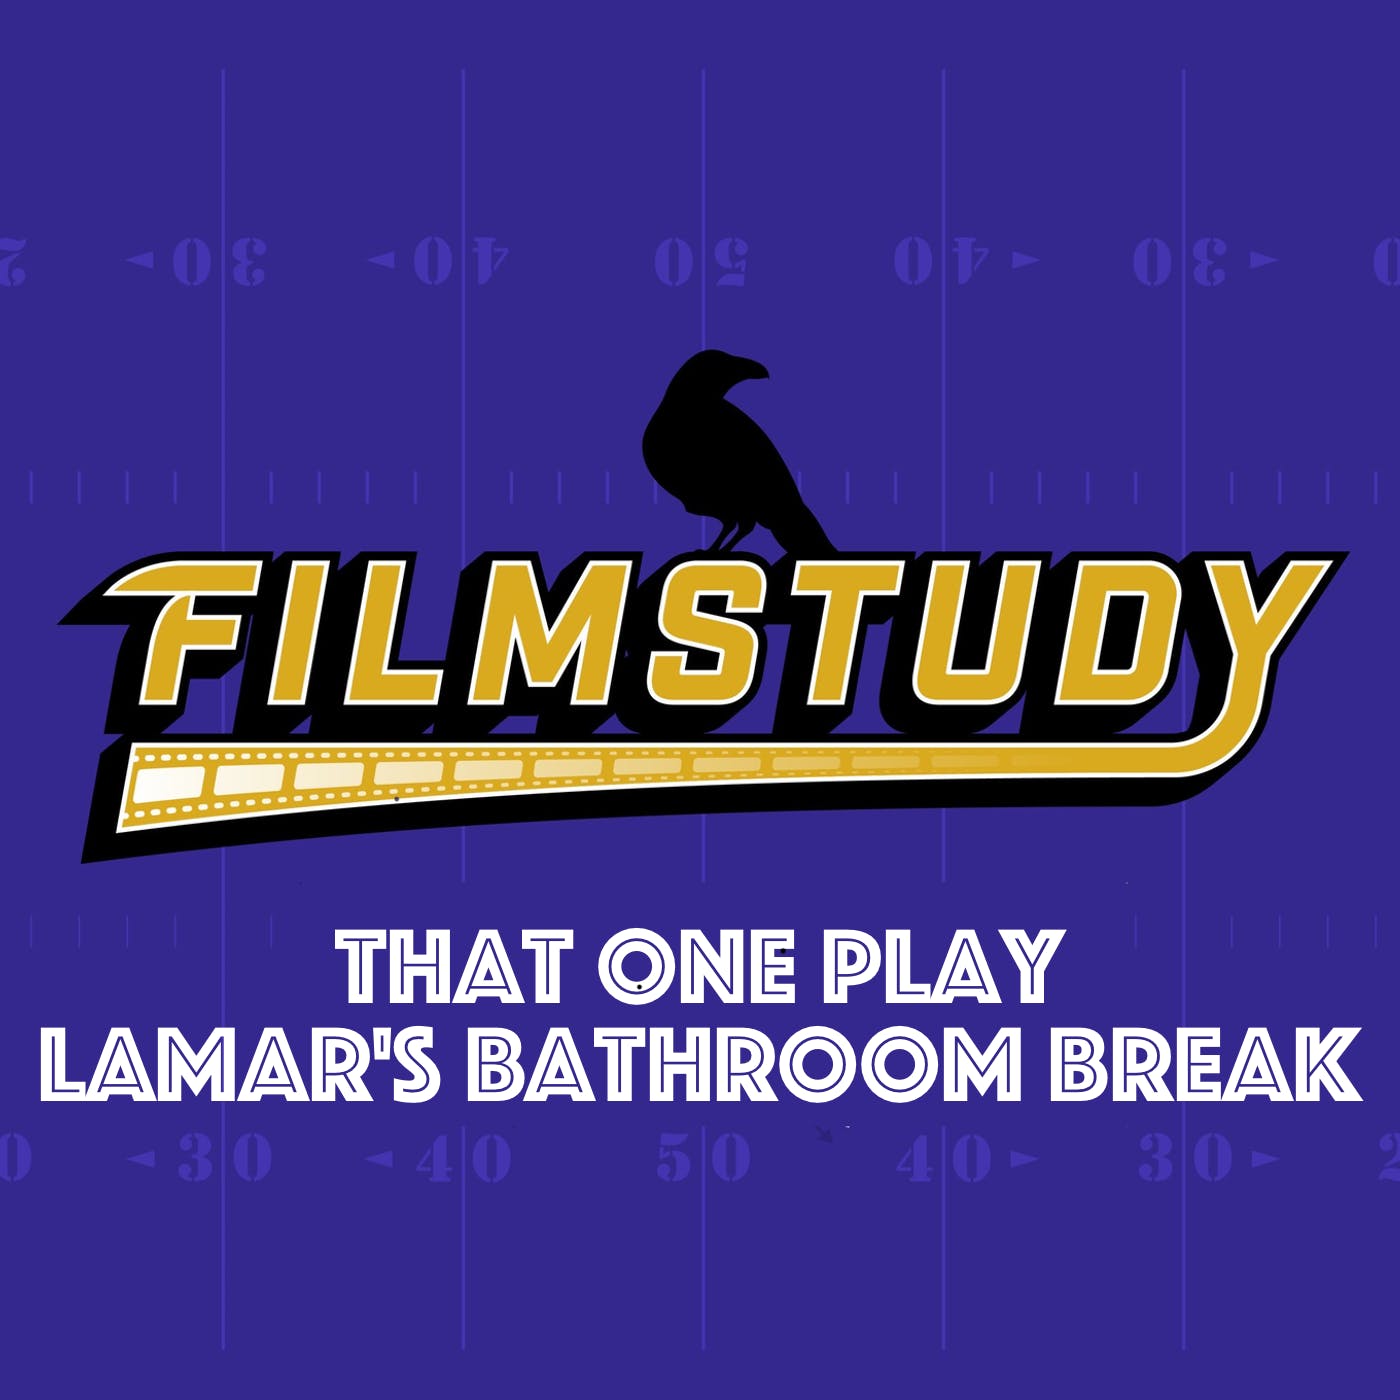 TOP : Lamar's Bathroom Break